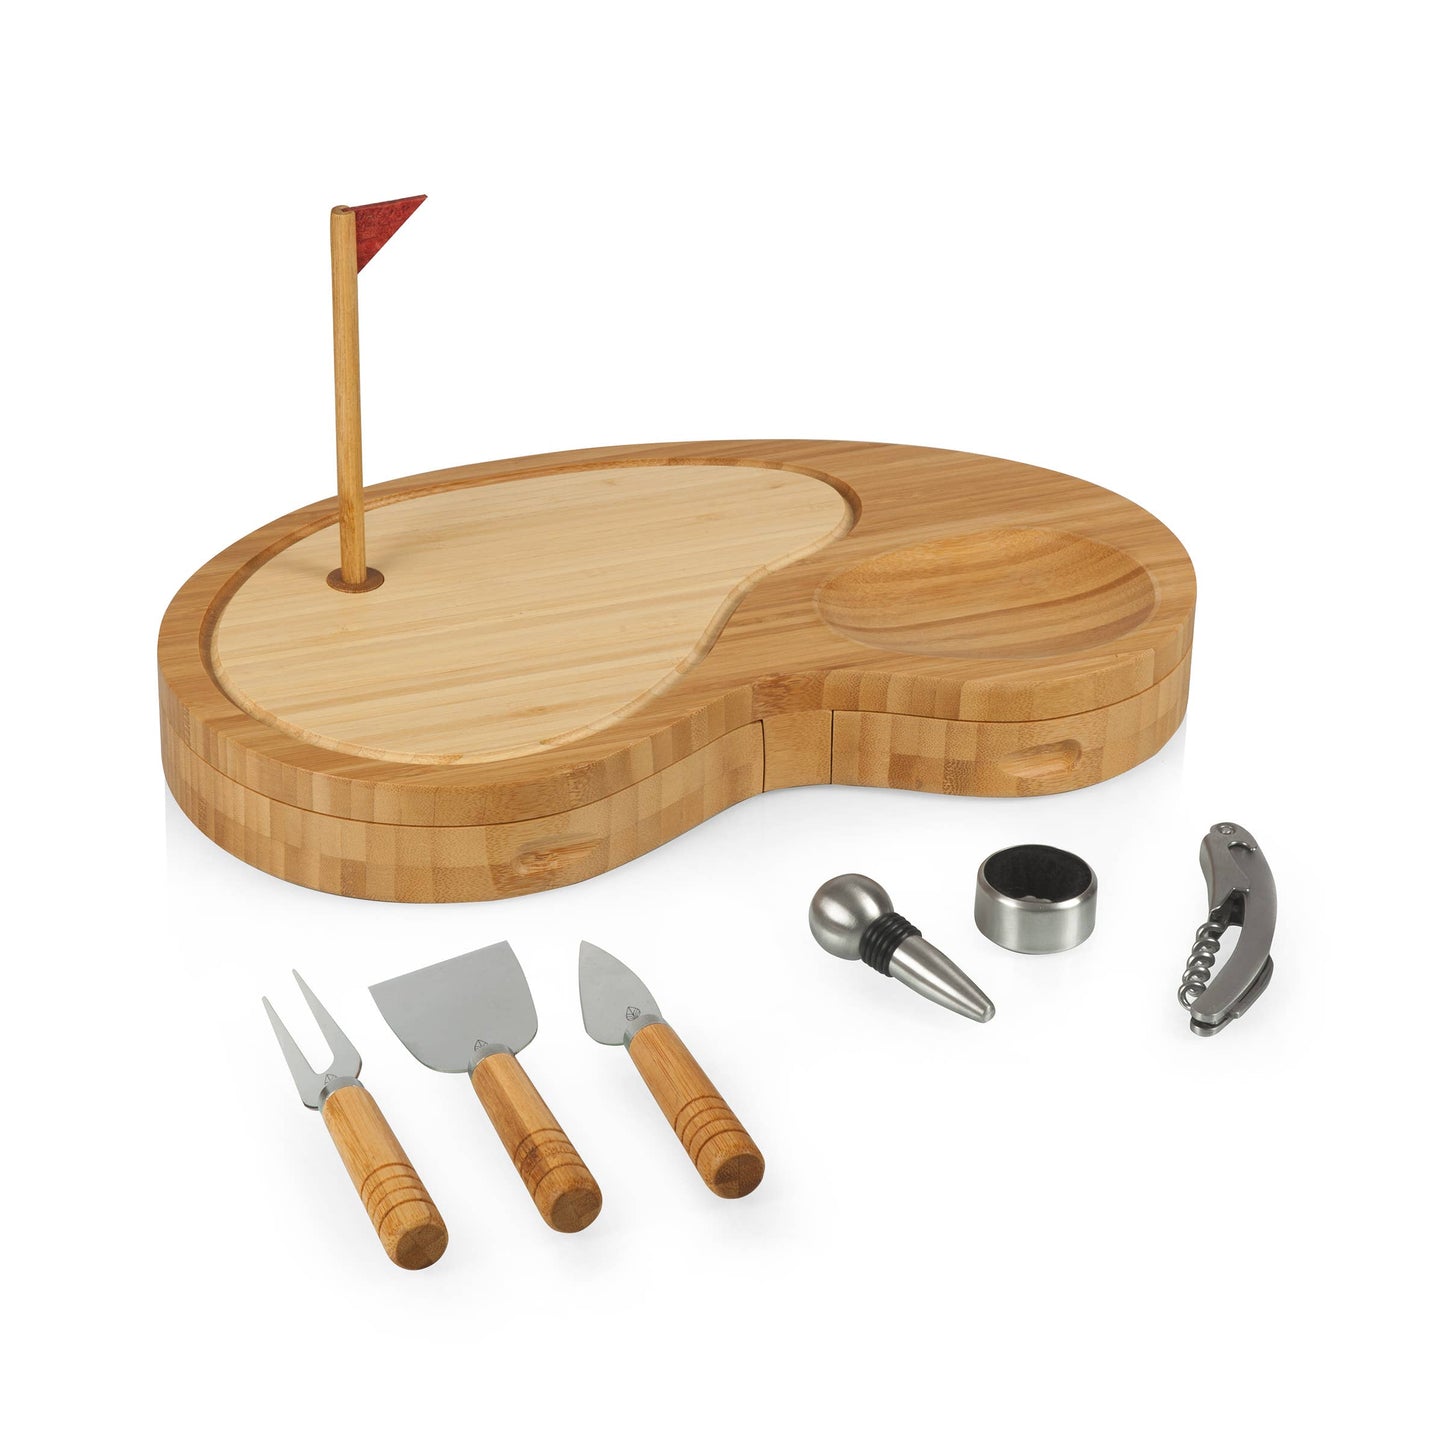 Sand Trap Golf Cheese Cutting Board & Tool Set - Core: Bamboo